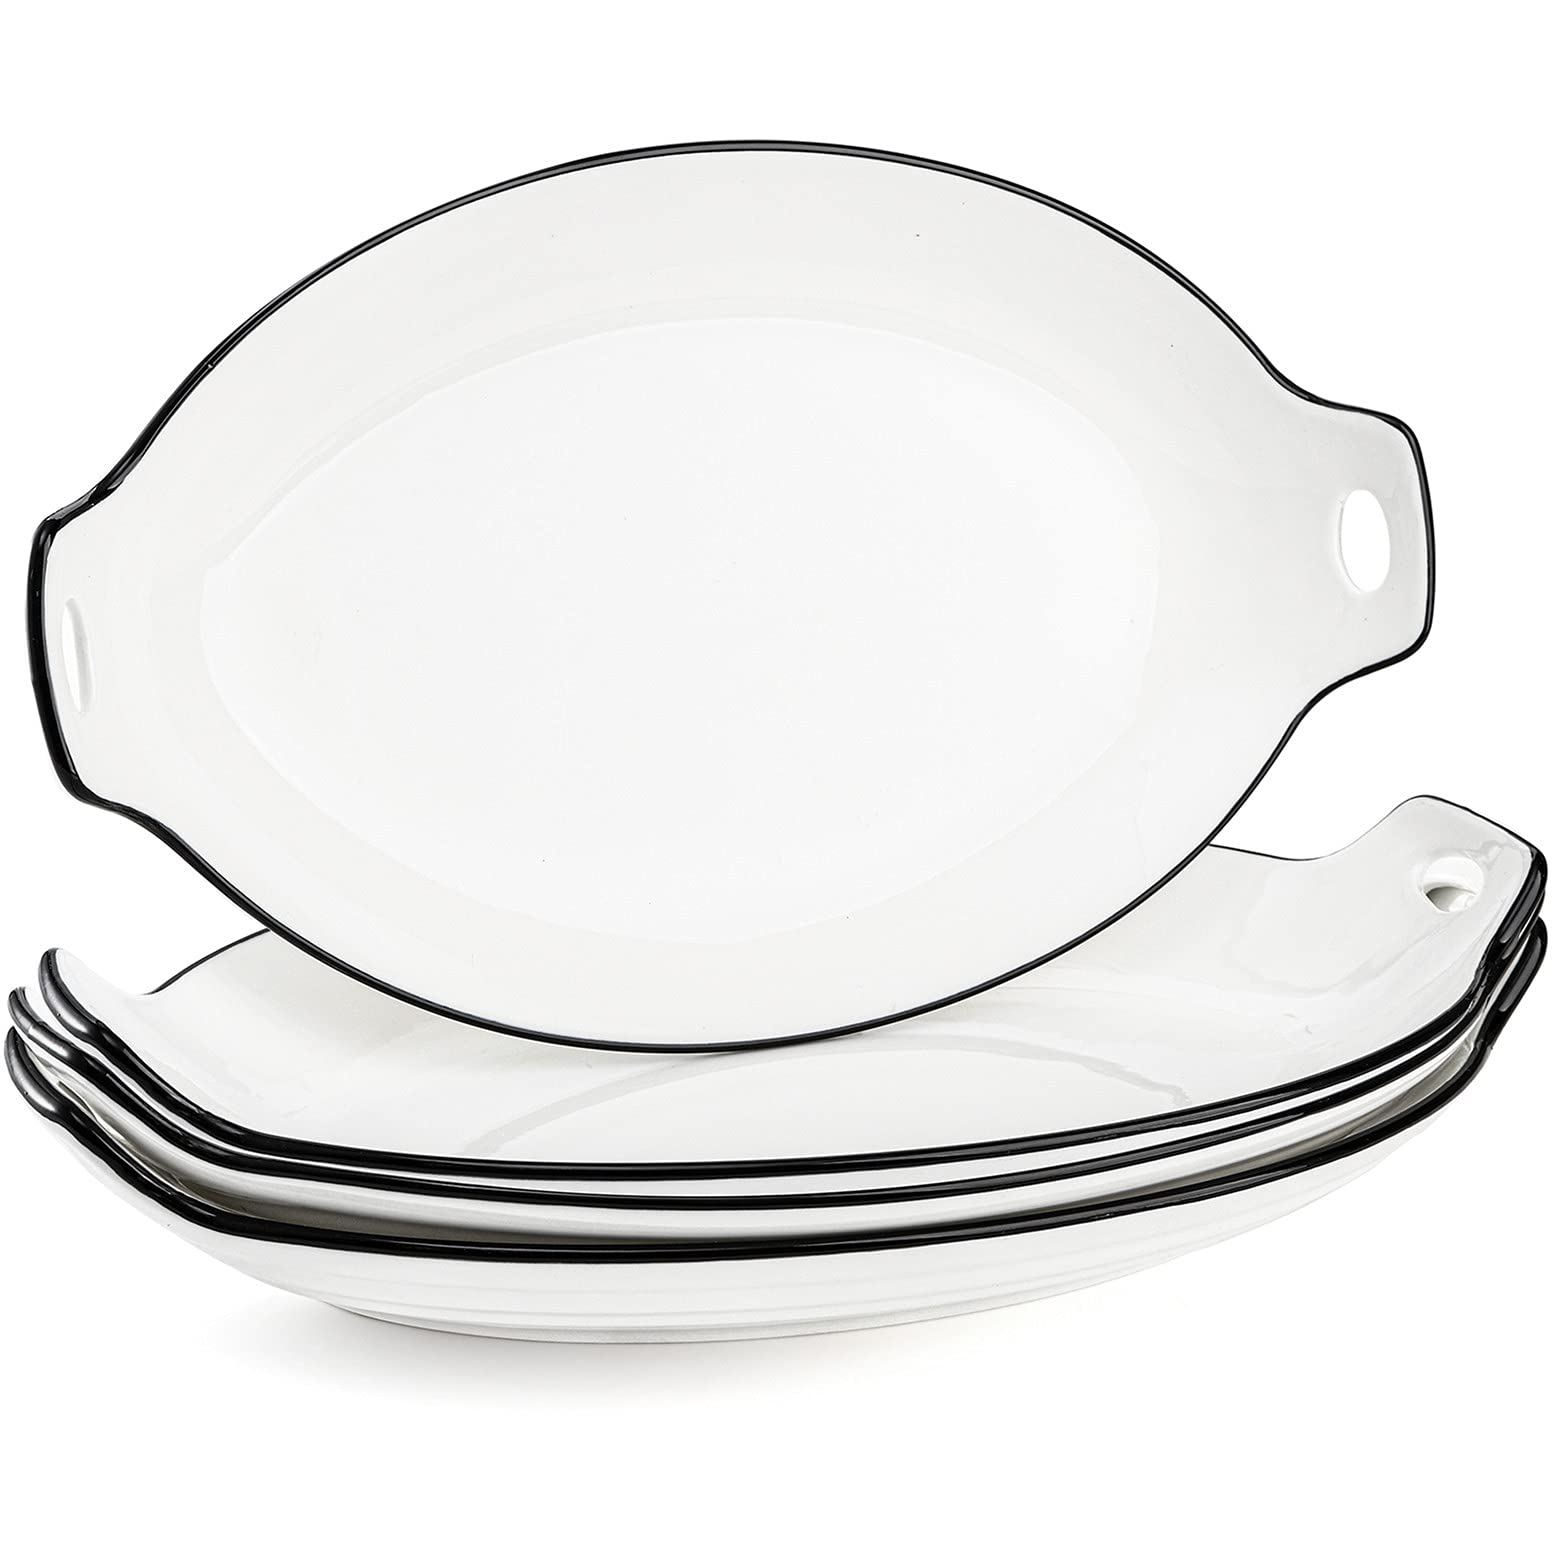 ZOOFOX Set of 4 Oval Serving Platter, 12" White Porcelain Serving Tray with Handle, Large Serving Plates for Appetizer, Dessert, Meat, Salad, Noodle